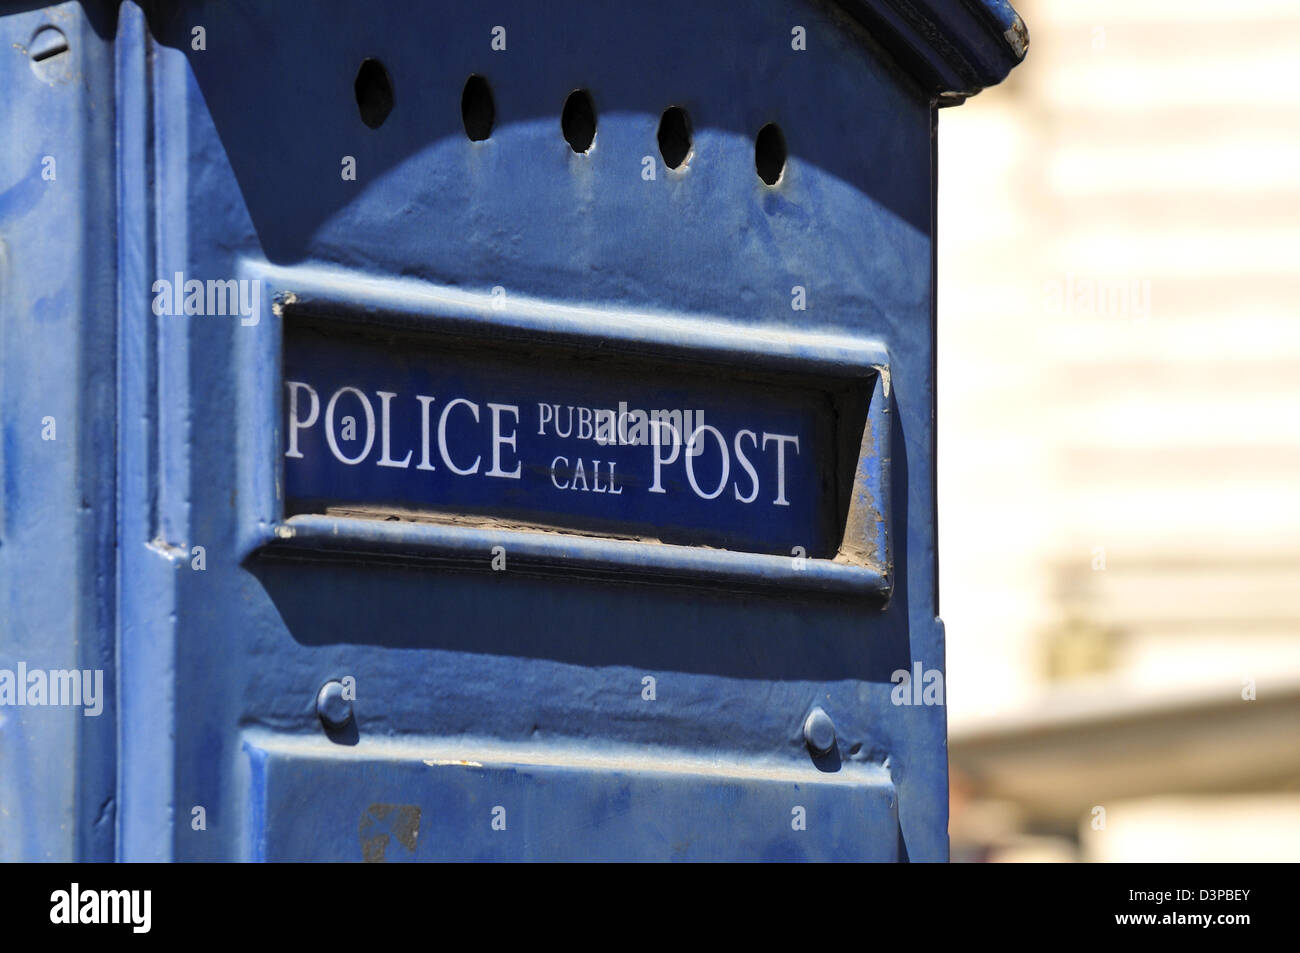 London, England, UK. Police public call box Stock Photo